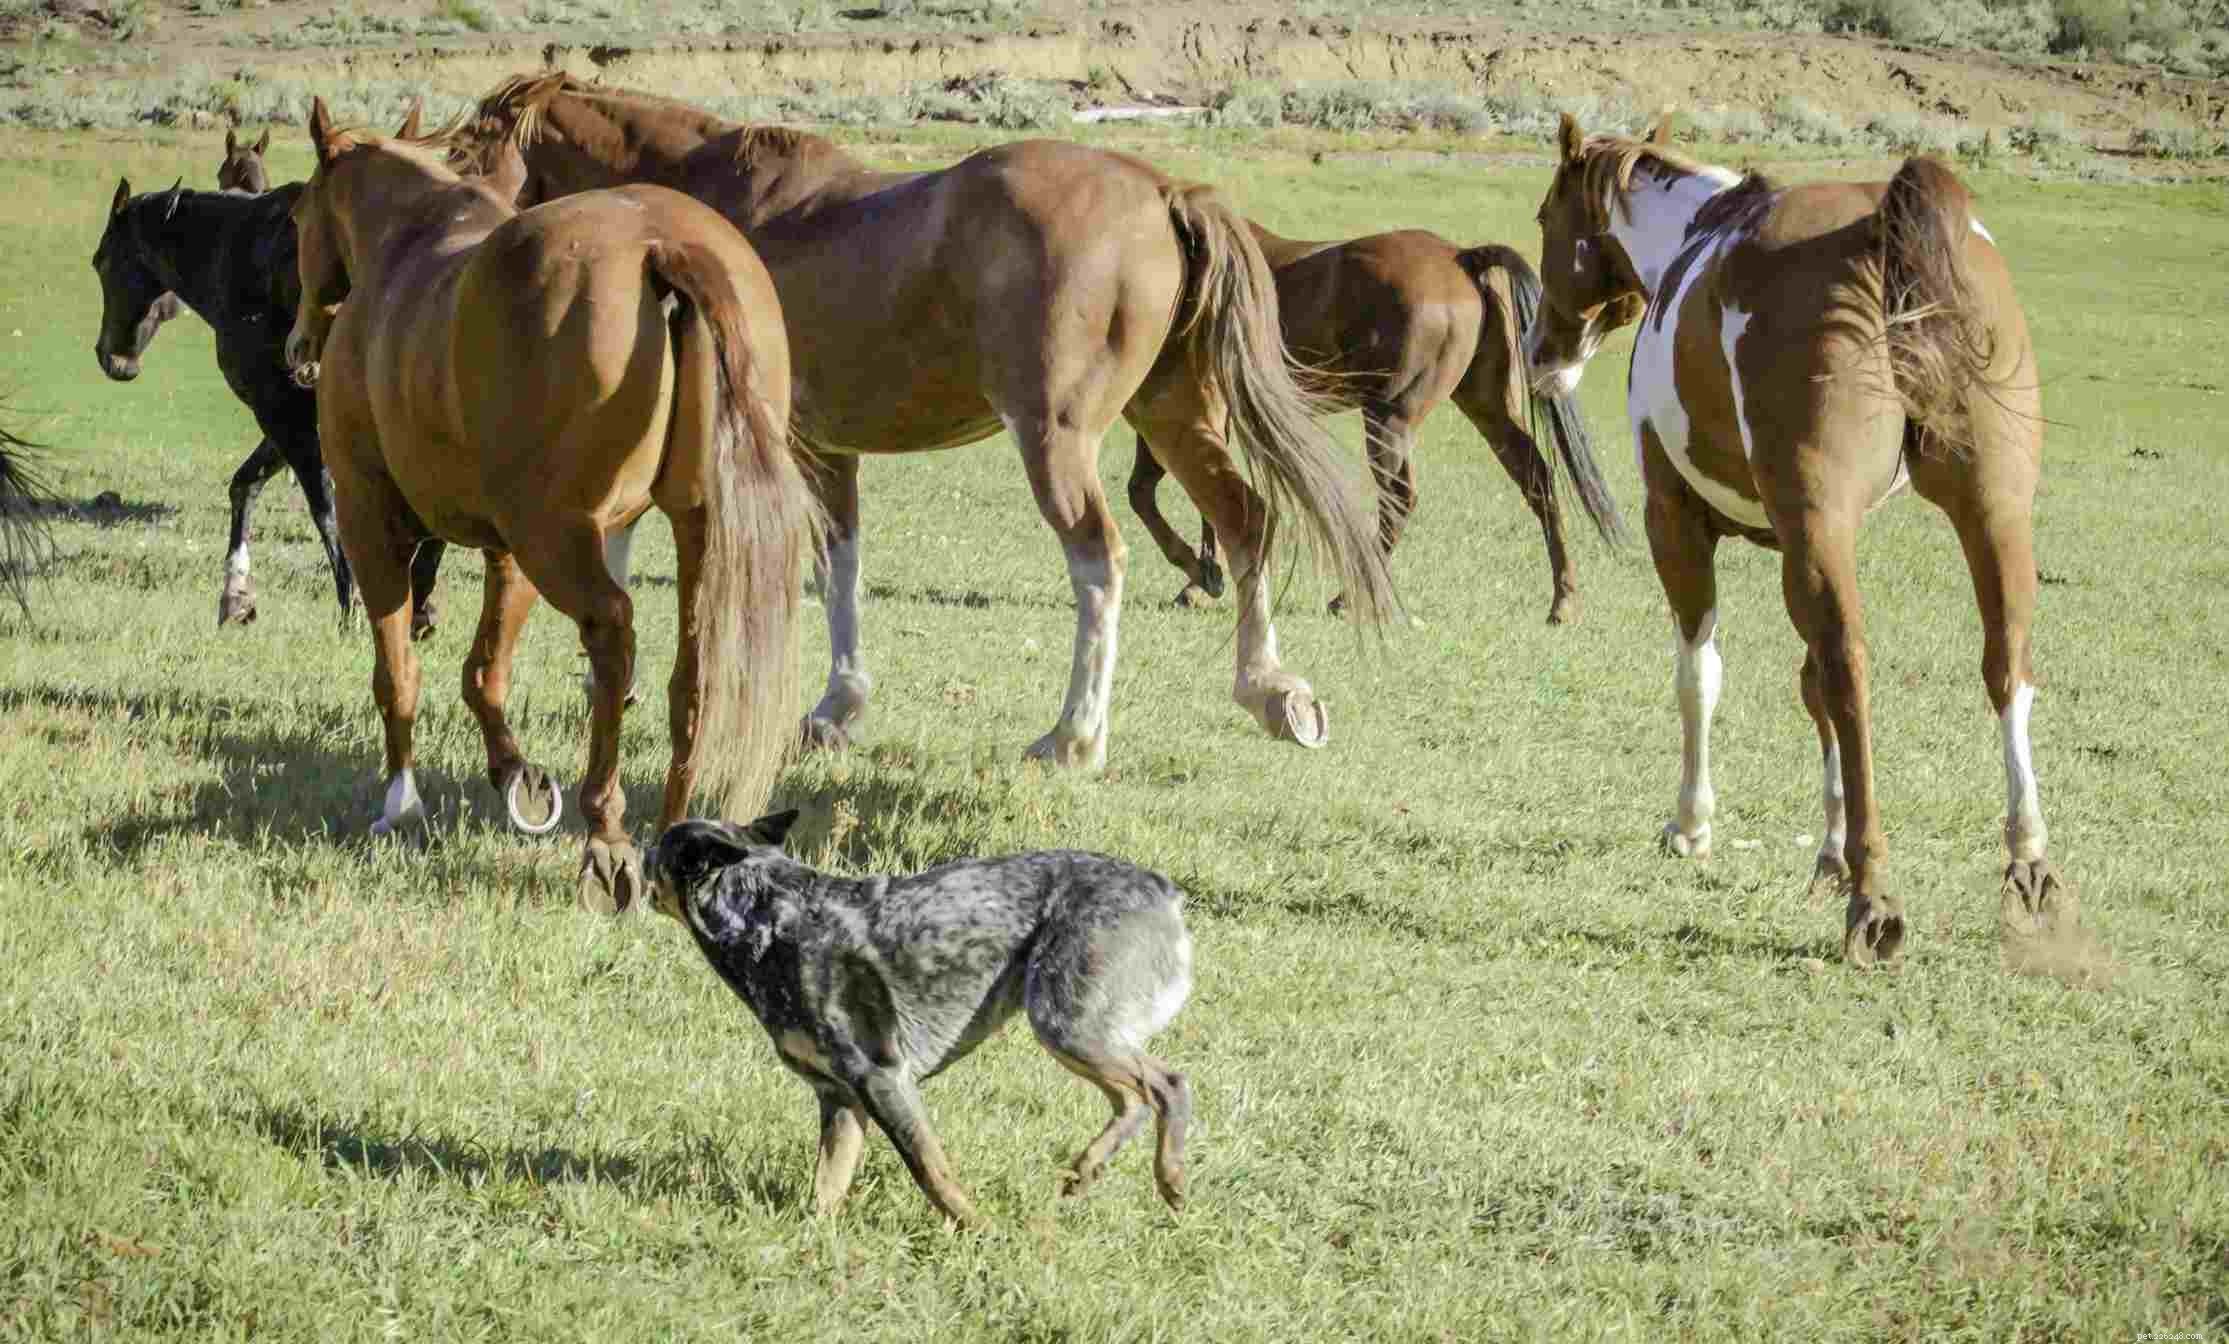 Blue Heeler (australisk boskapshund):Hundrasegenskaper och skötsel